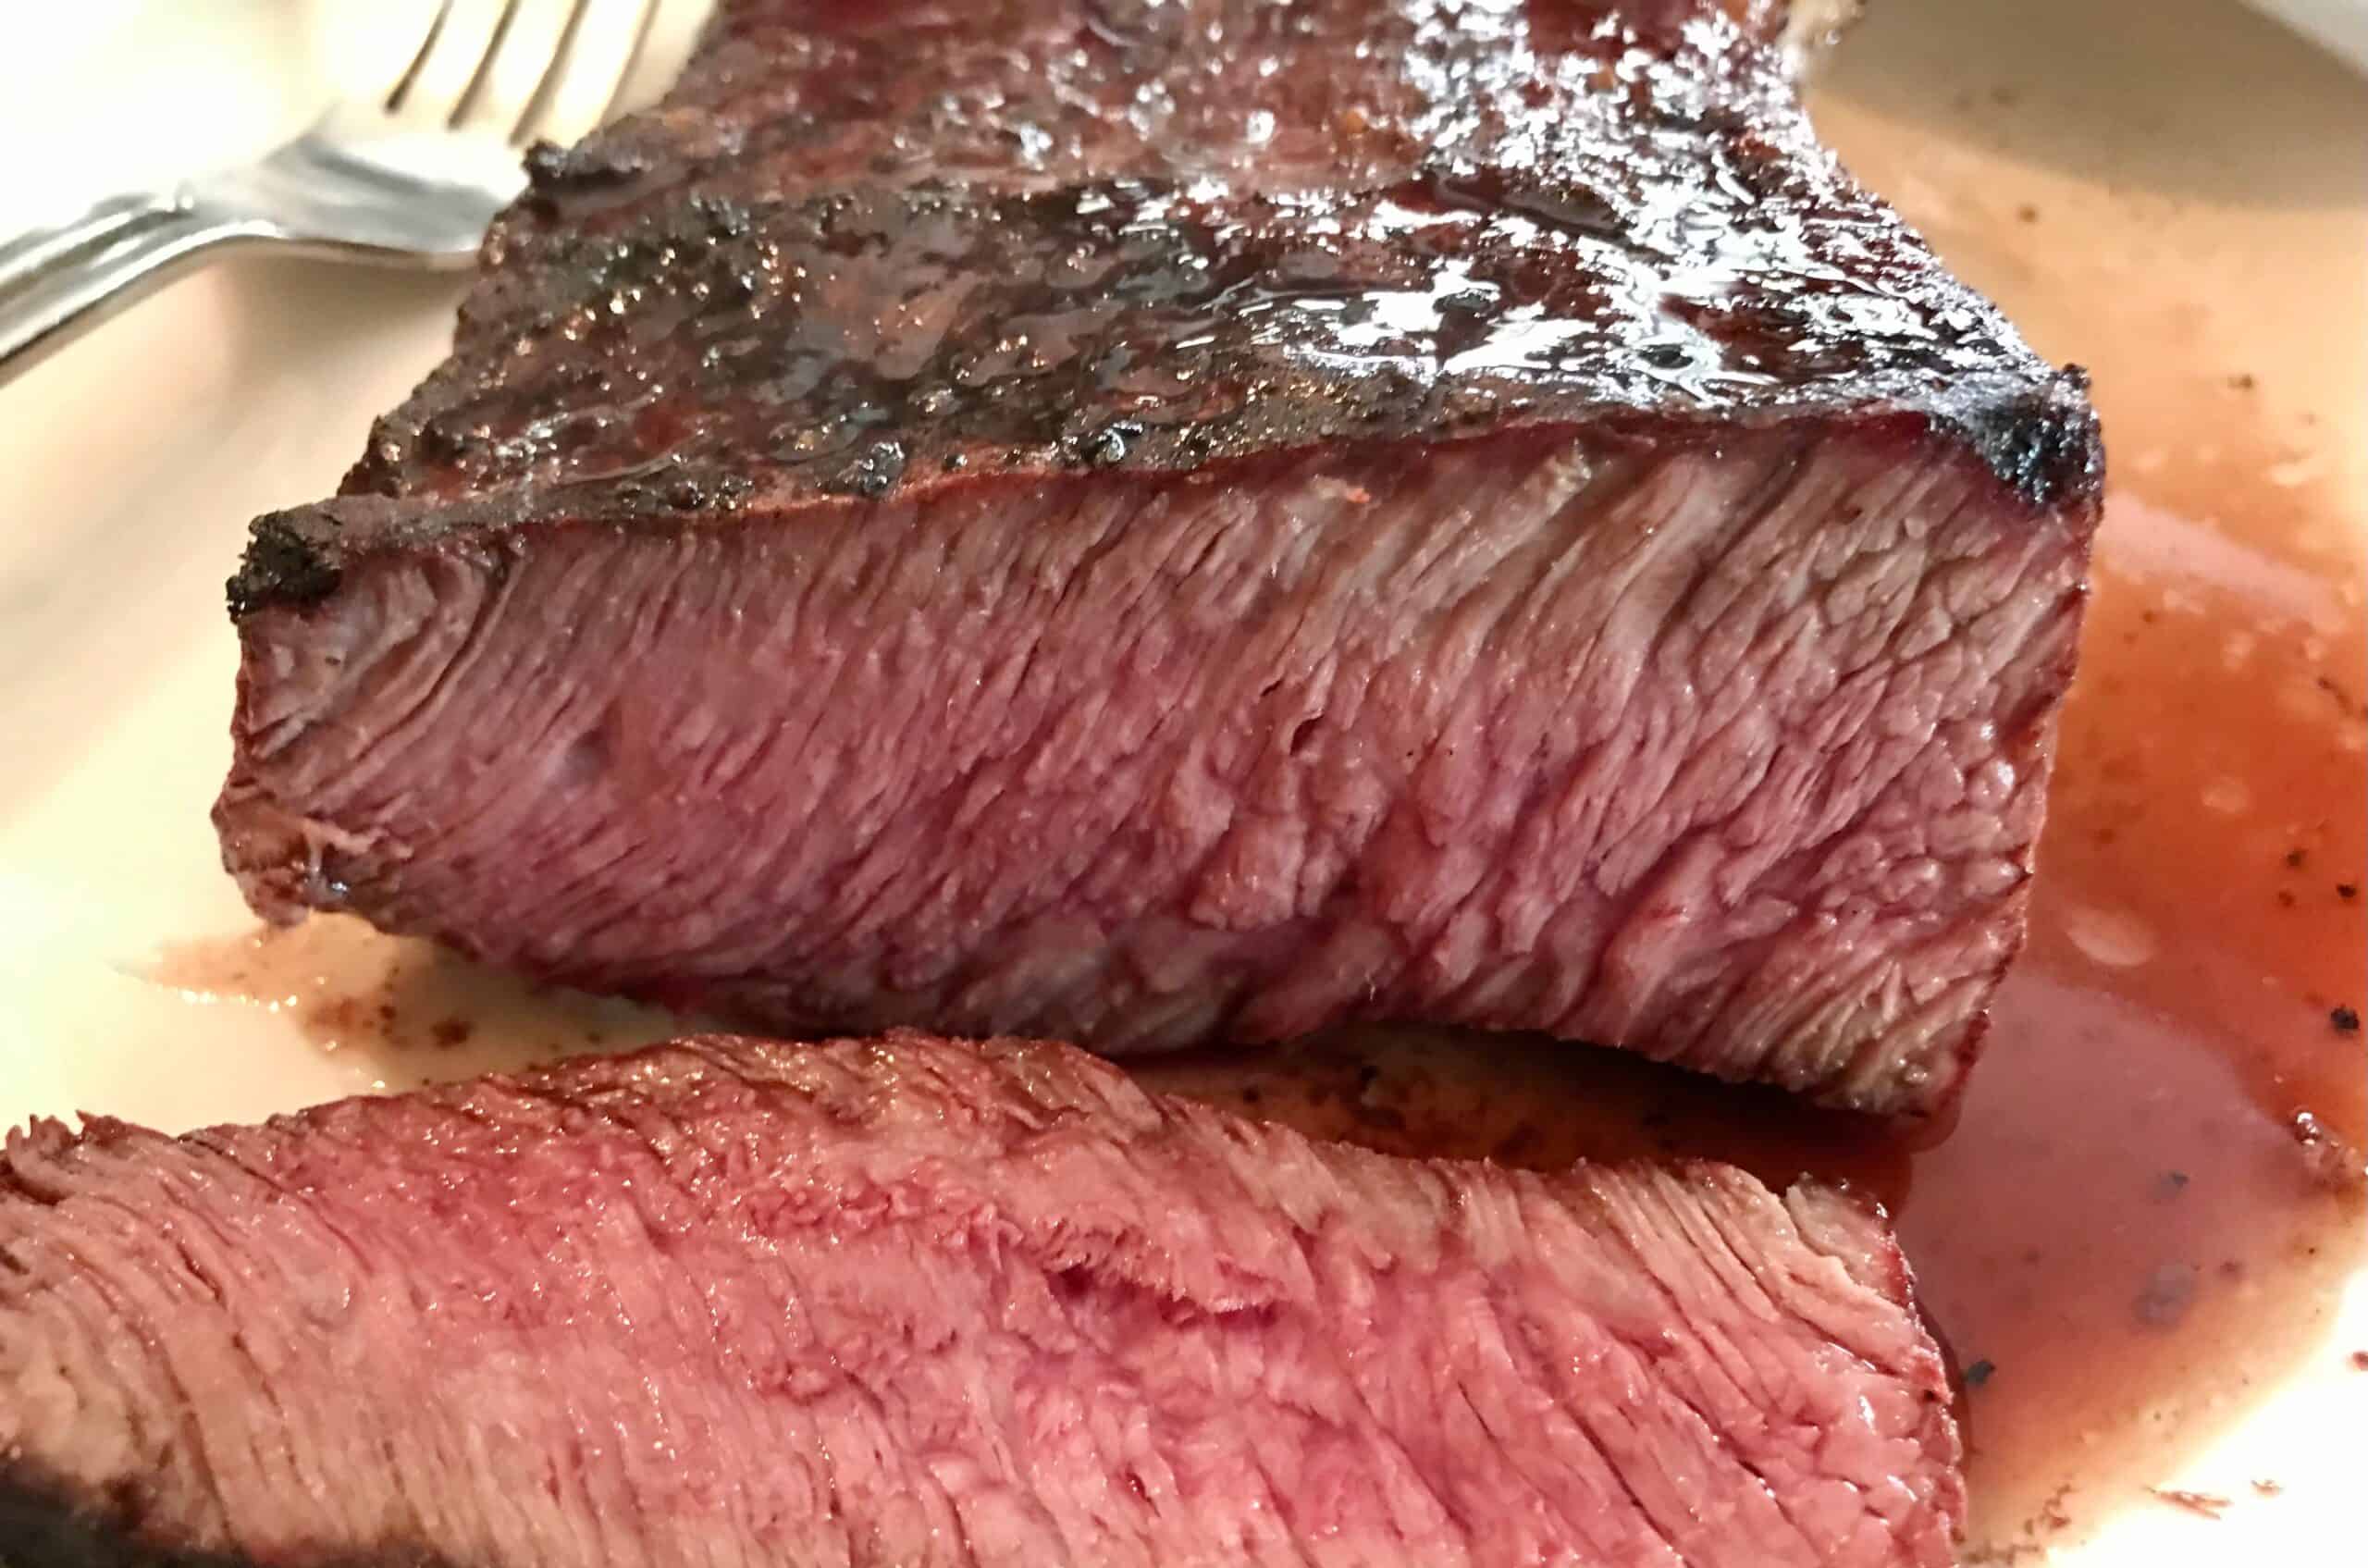 Denver steak is affordable, richly flavored, tender - and underrated